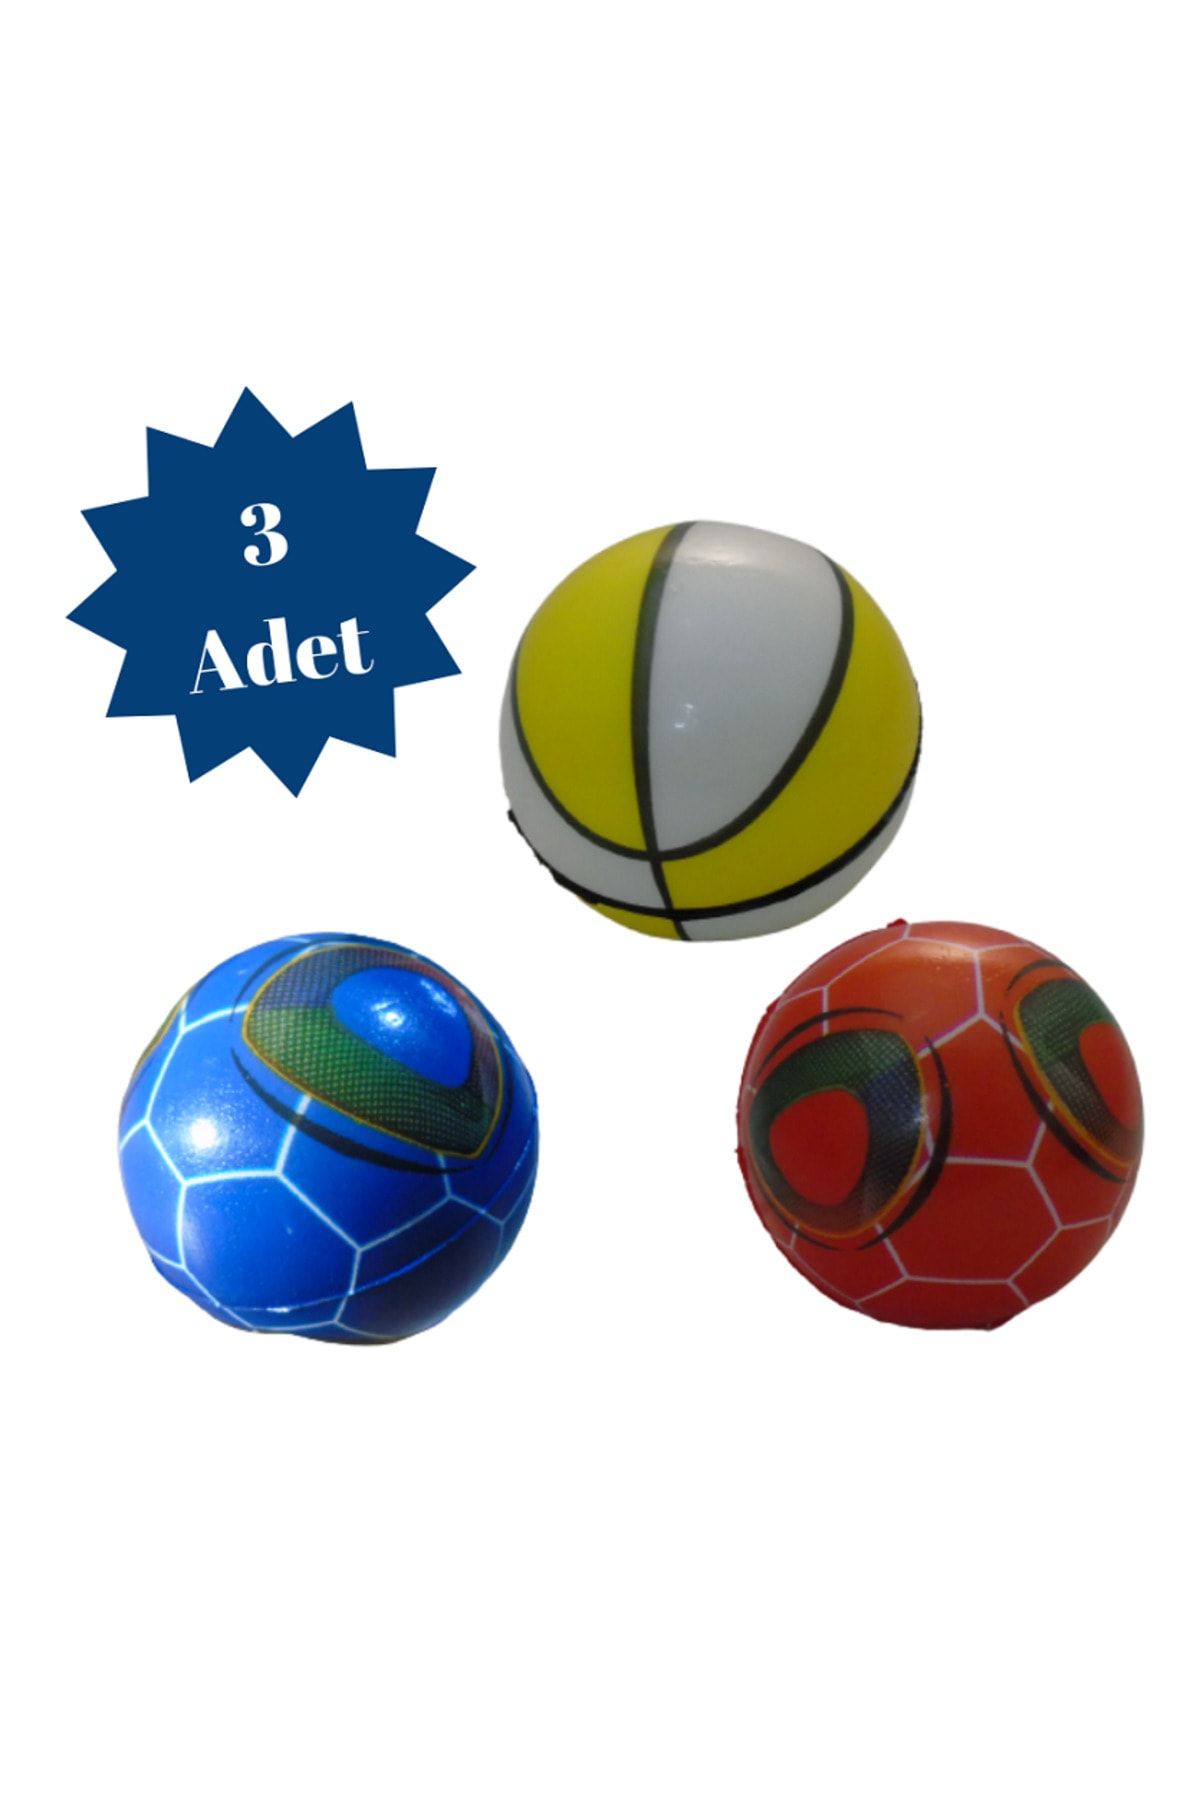 ÇAKABEY El & Parmak Çalıştırma Topu /Stres Topu / Avuç Topu / Sünger Top / Dünya Top 7,5 cm Yumuşak Top